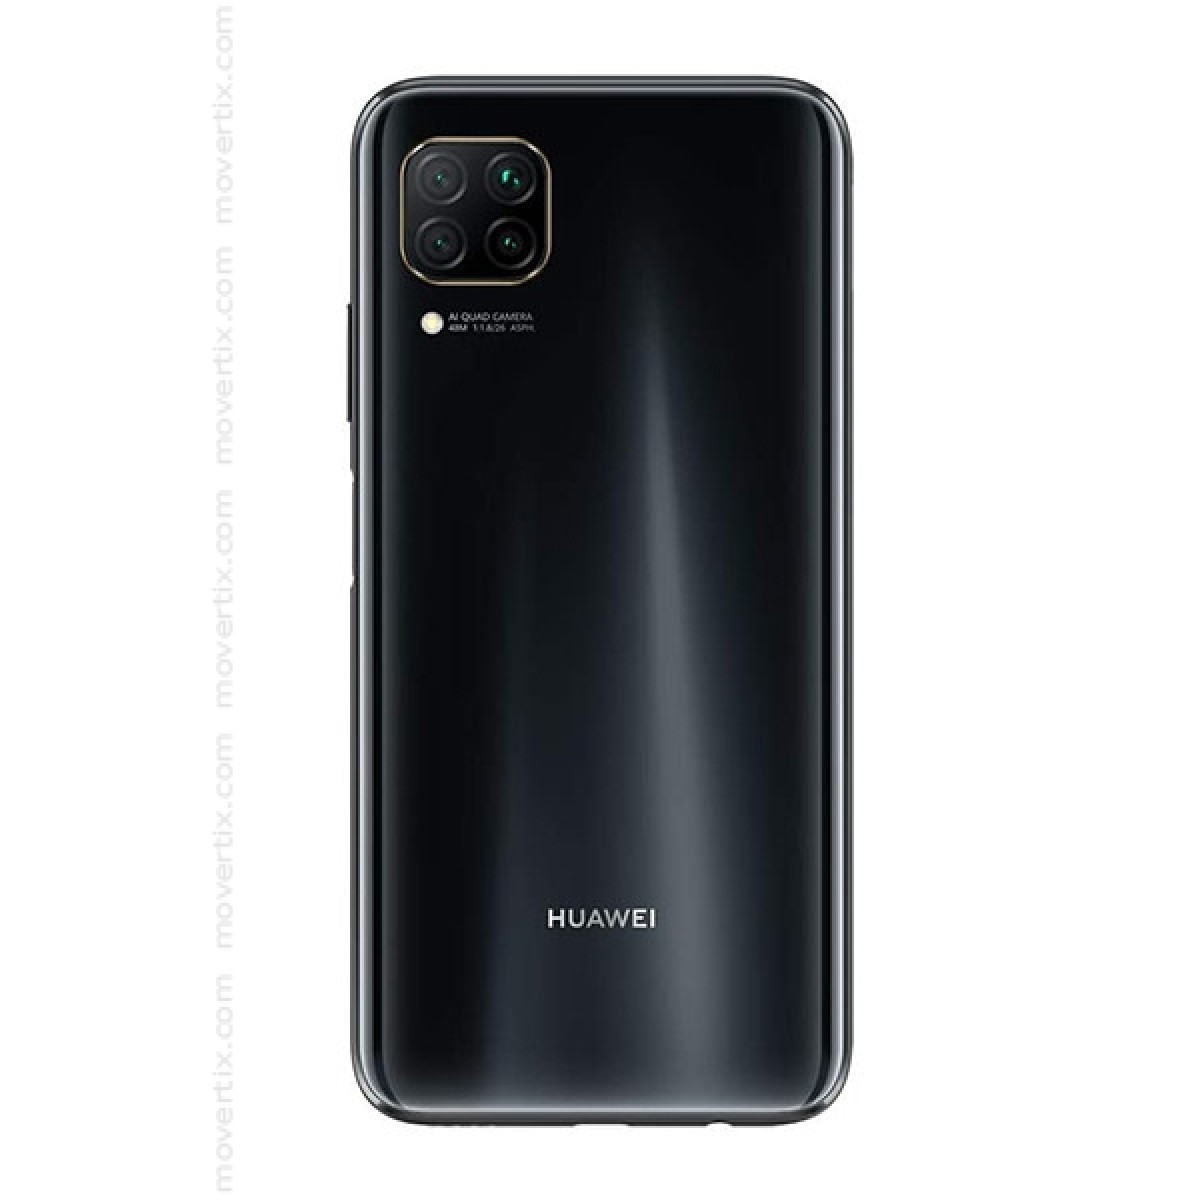 Huawei P40 Lite Dual Sim Midnight Black 128gb And 6gb Ram Movertix Mobile Phones Shop